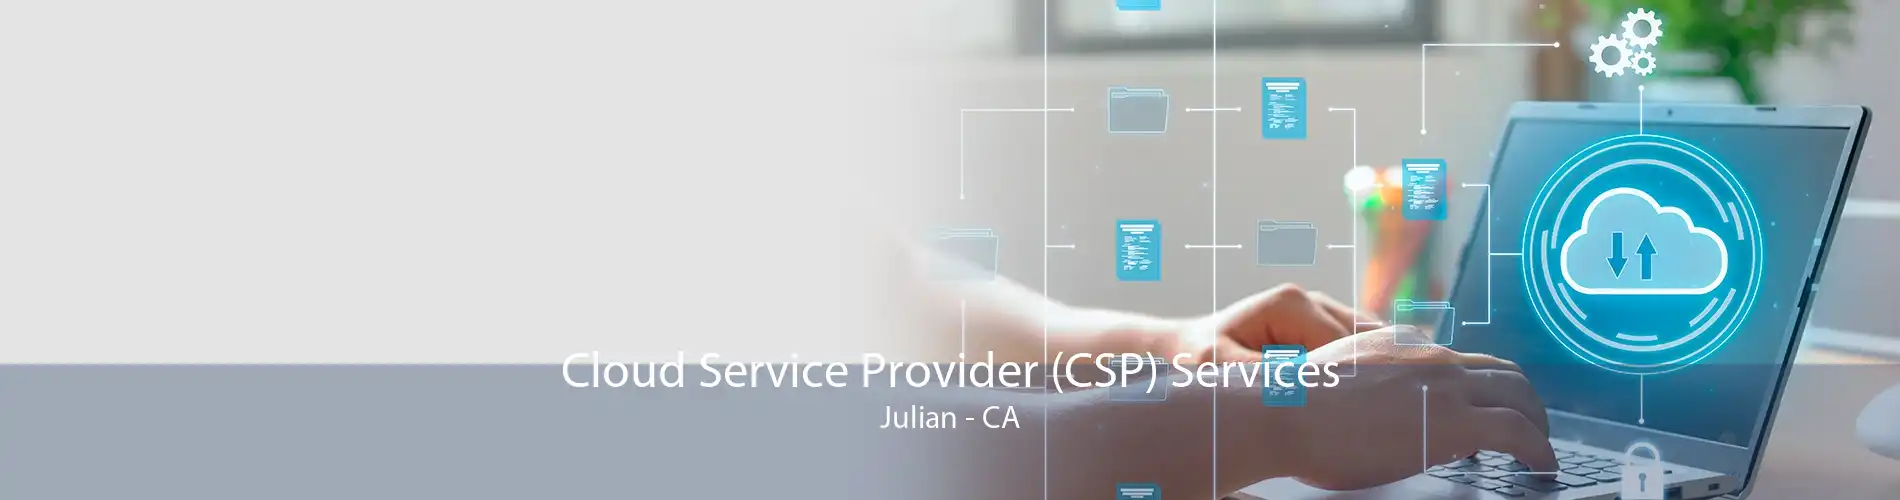 Cloud Service Provider (CSP) Services Julian - CA